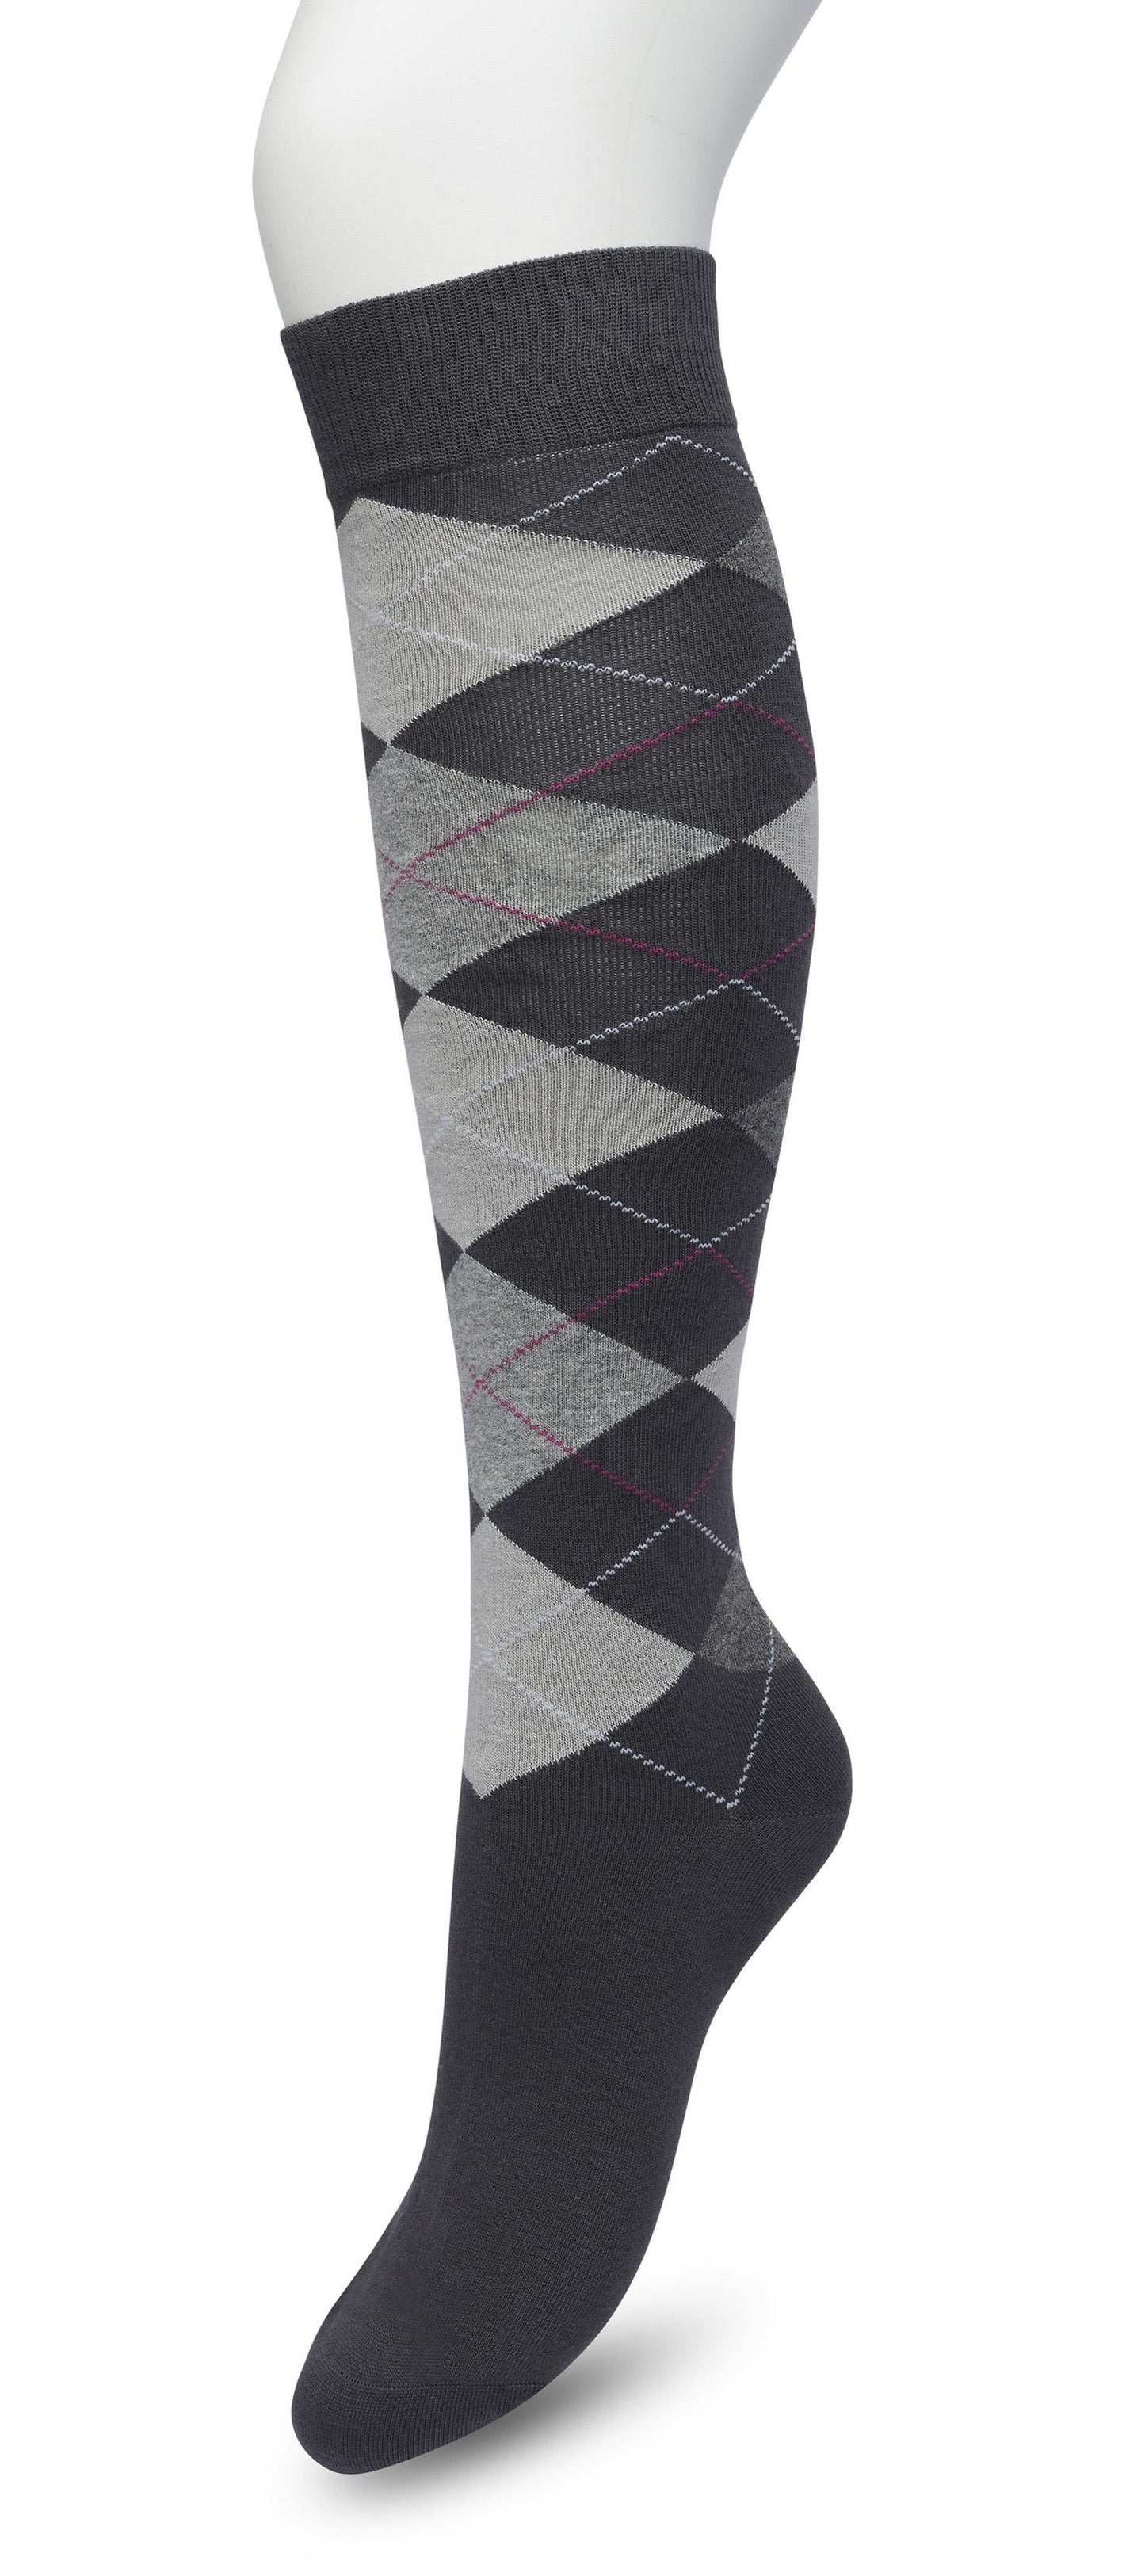 Bonnie Doon BP211505 Argyle Knee-highs - Golf style knee-high socks with a diamond argyle tartan check pattern in light grey, dark grey and pink.